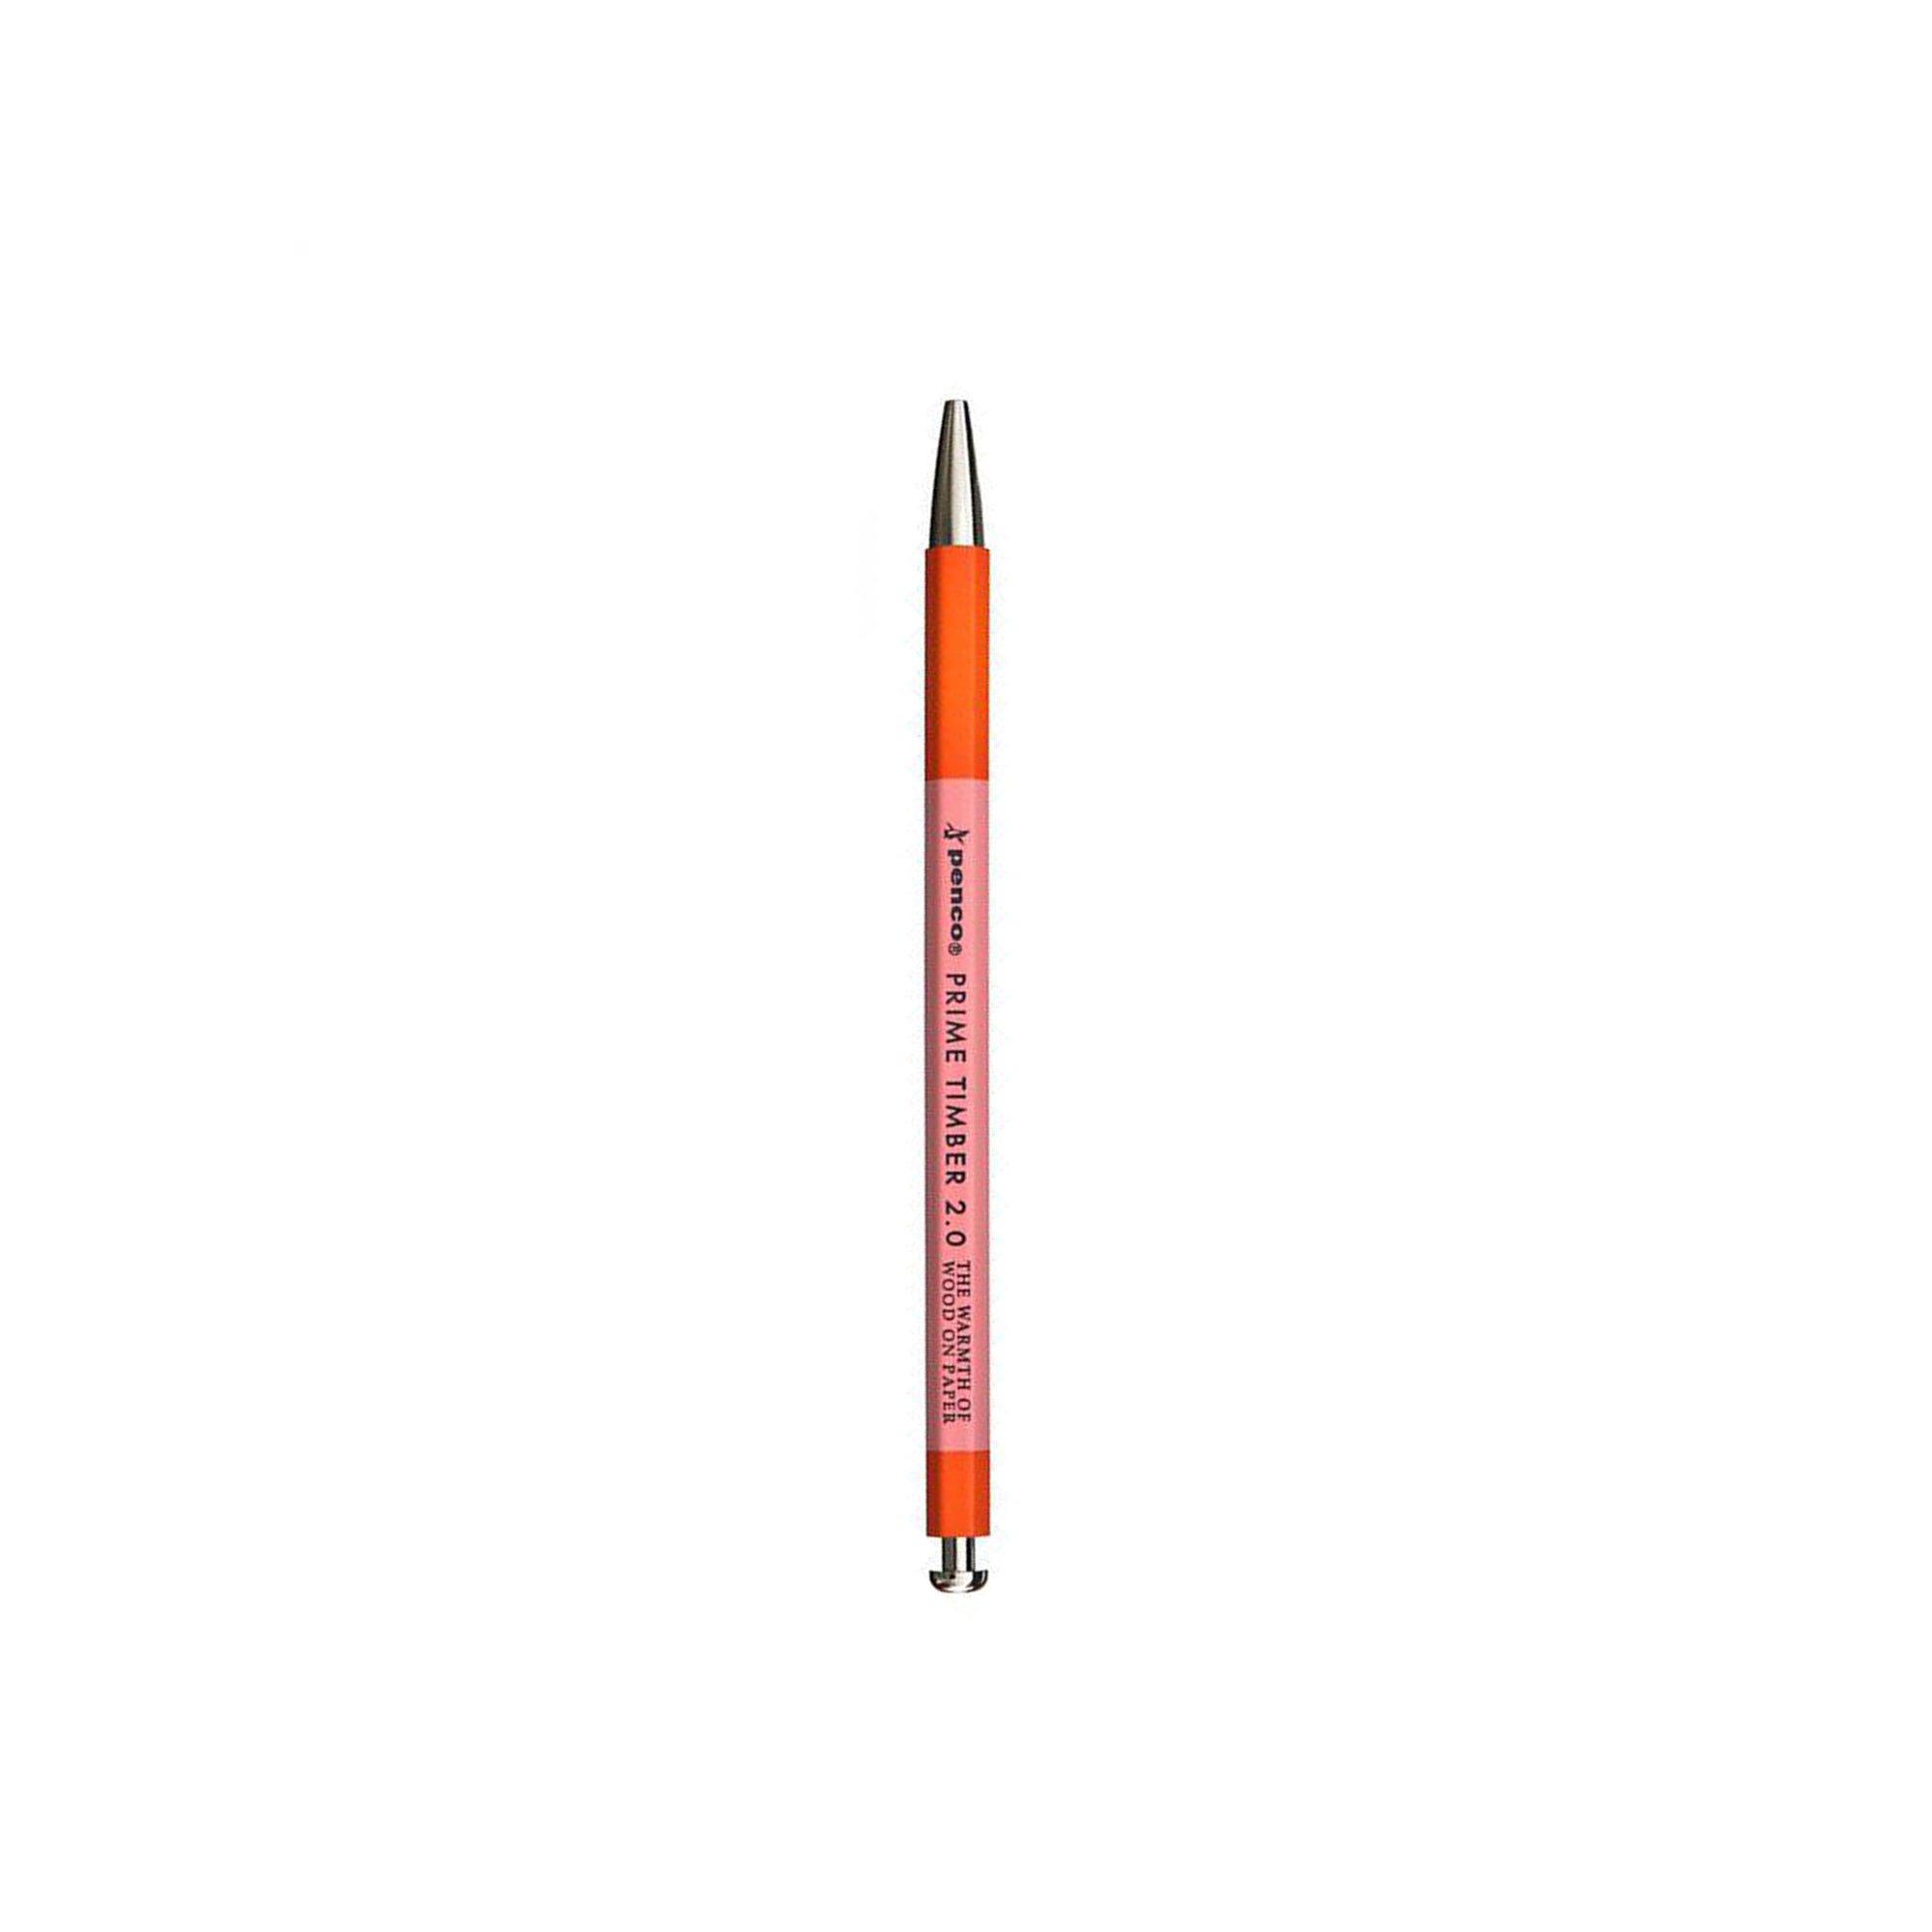 Prime Timber Mechanical Pencil